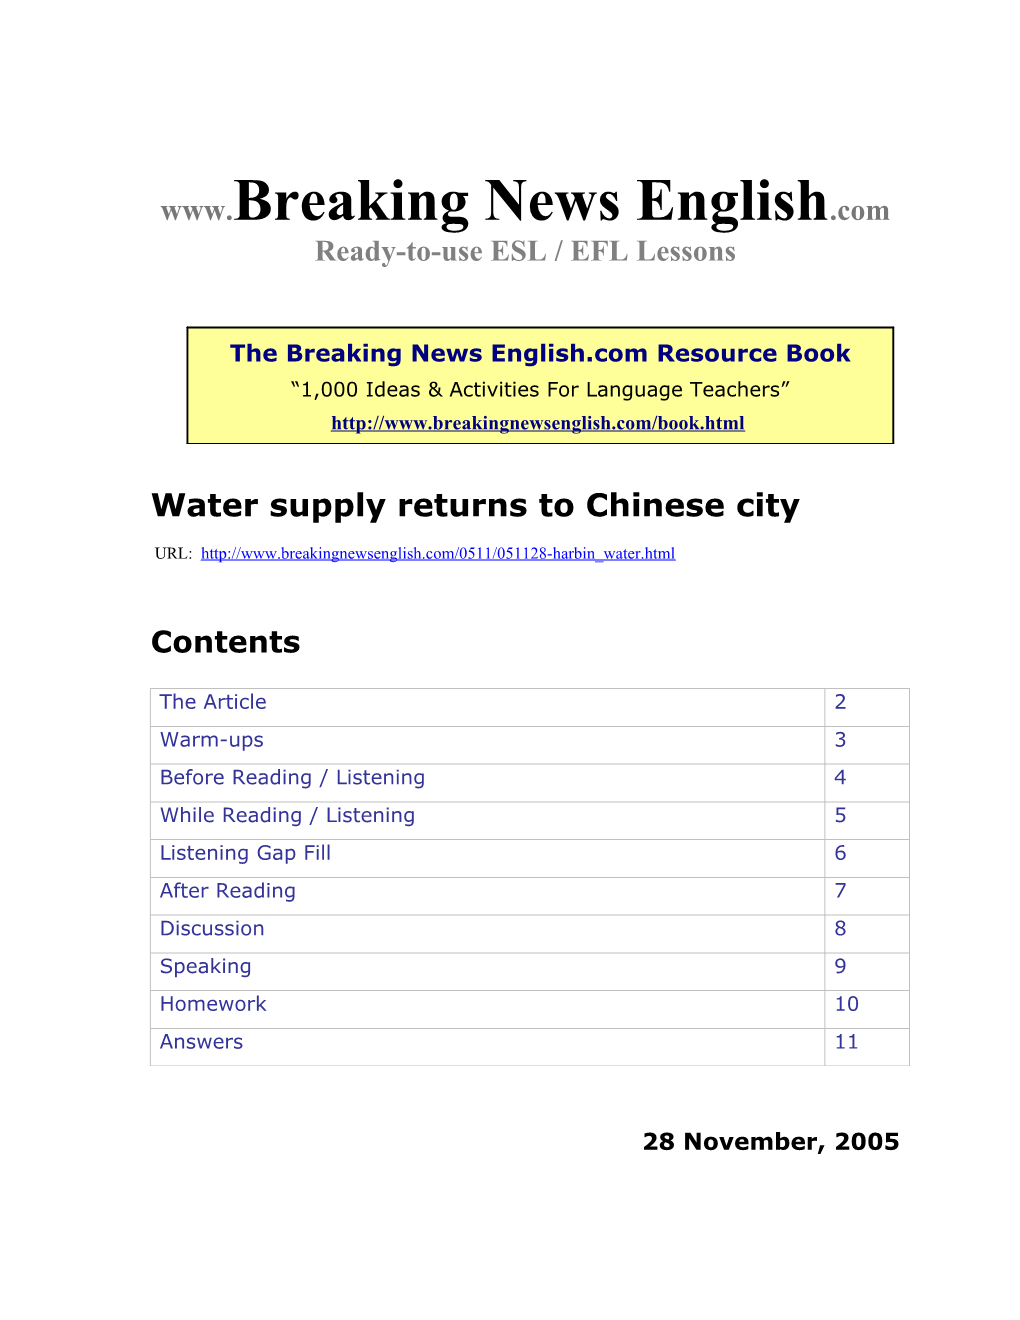 Water Supply Returns to Chinese City